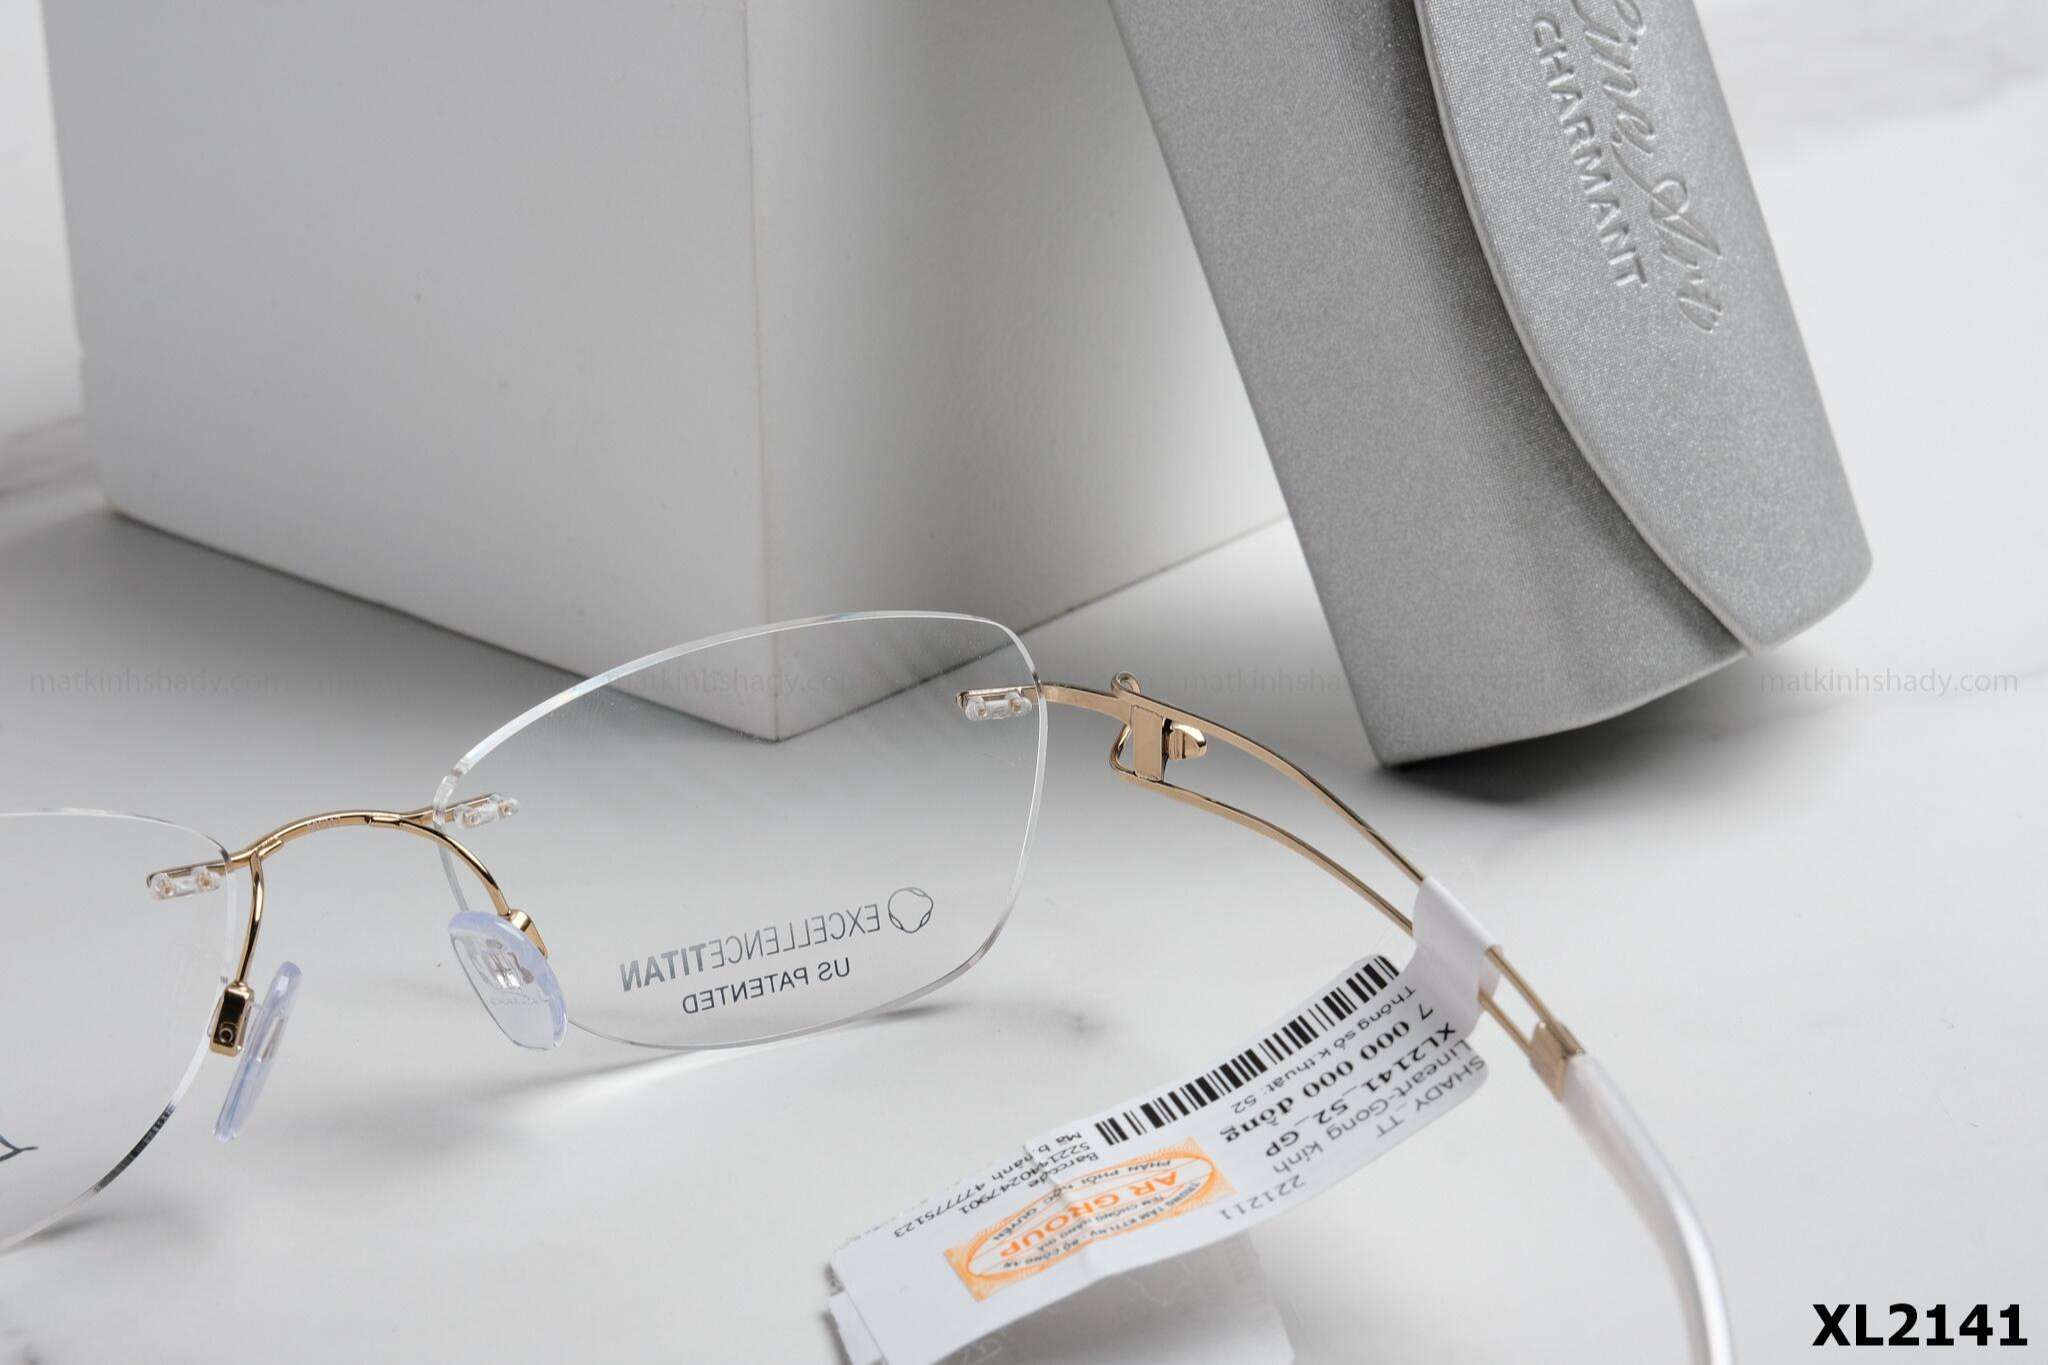  LINE ART CHARMANT Eyewear - Glasses - XL2141 